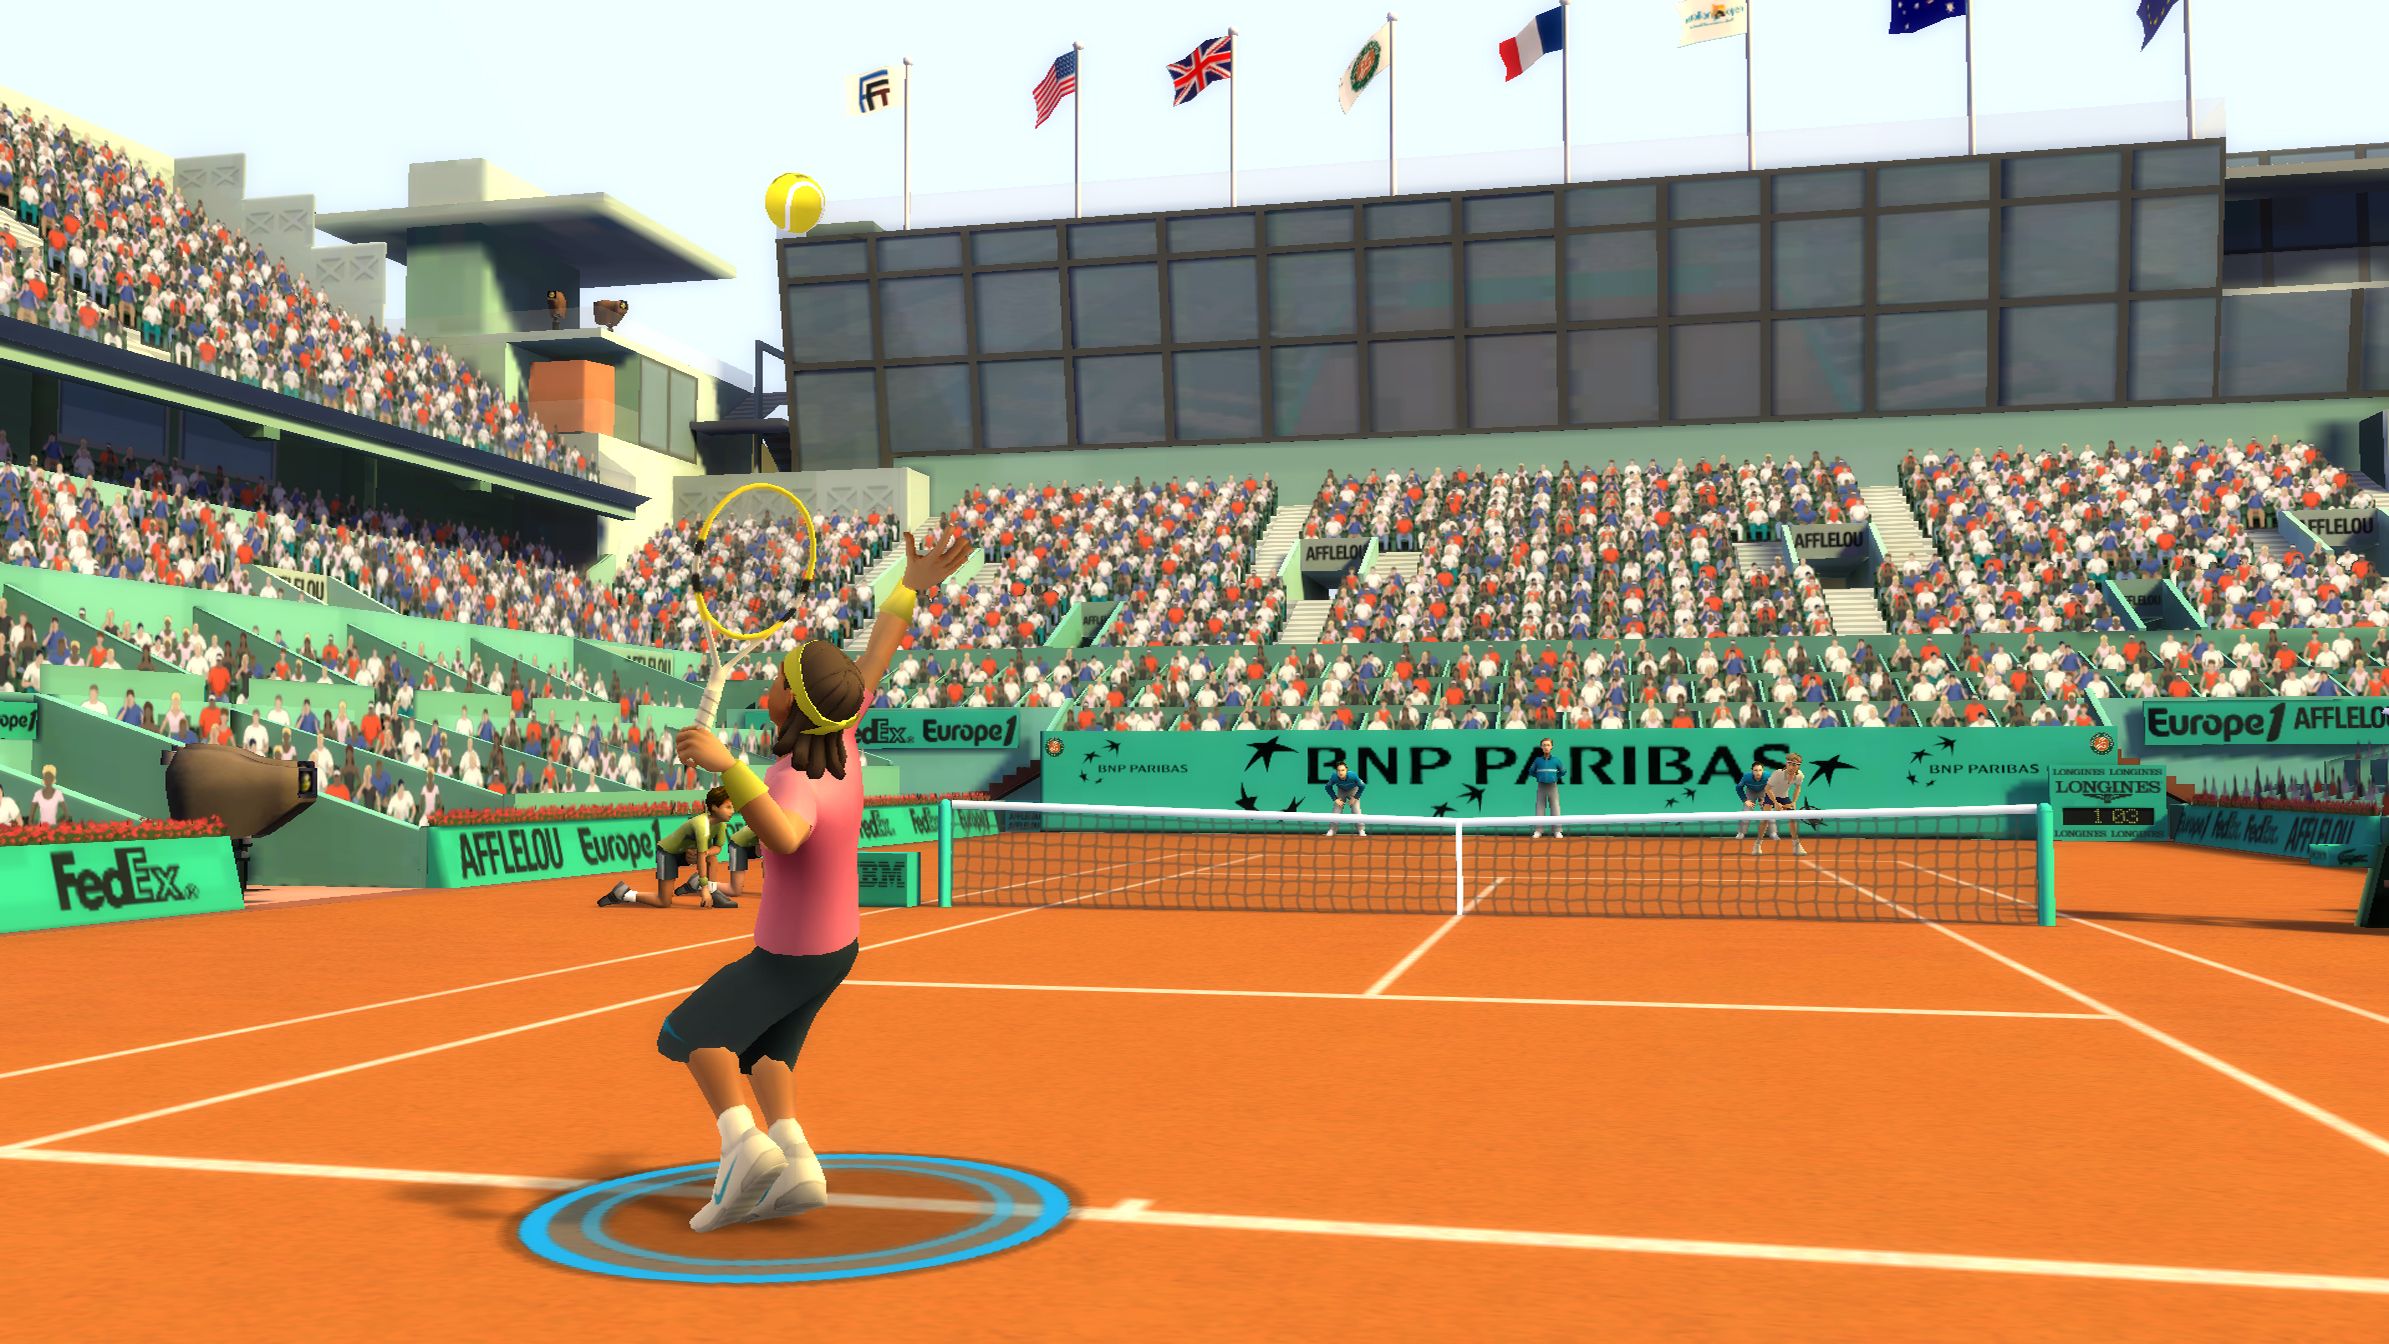 Первая игра теннис. Virtua Tennis World Tour. Грэнд слэм. Пушка для игры в теннис. Первая компьютерная игра теннис.